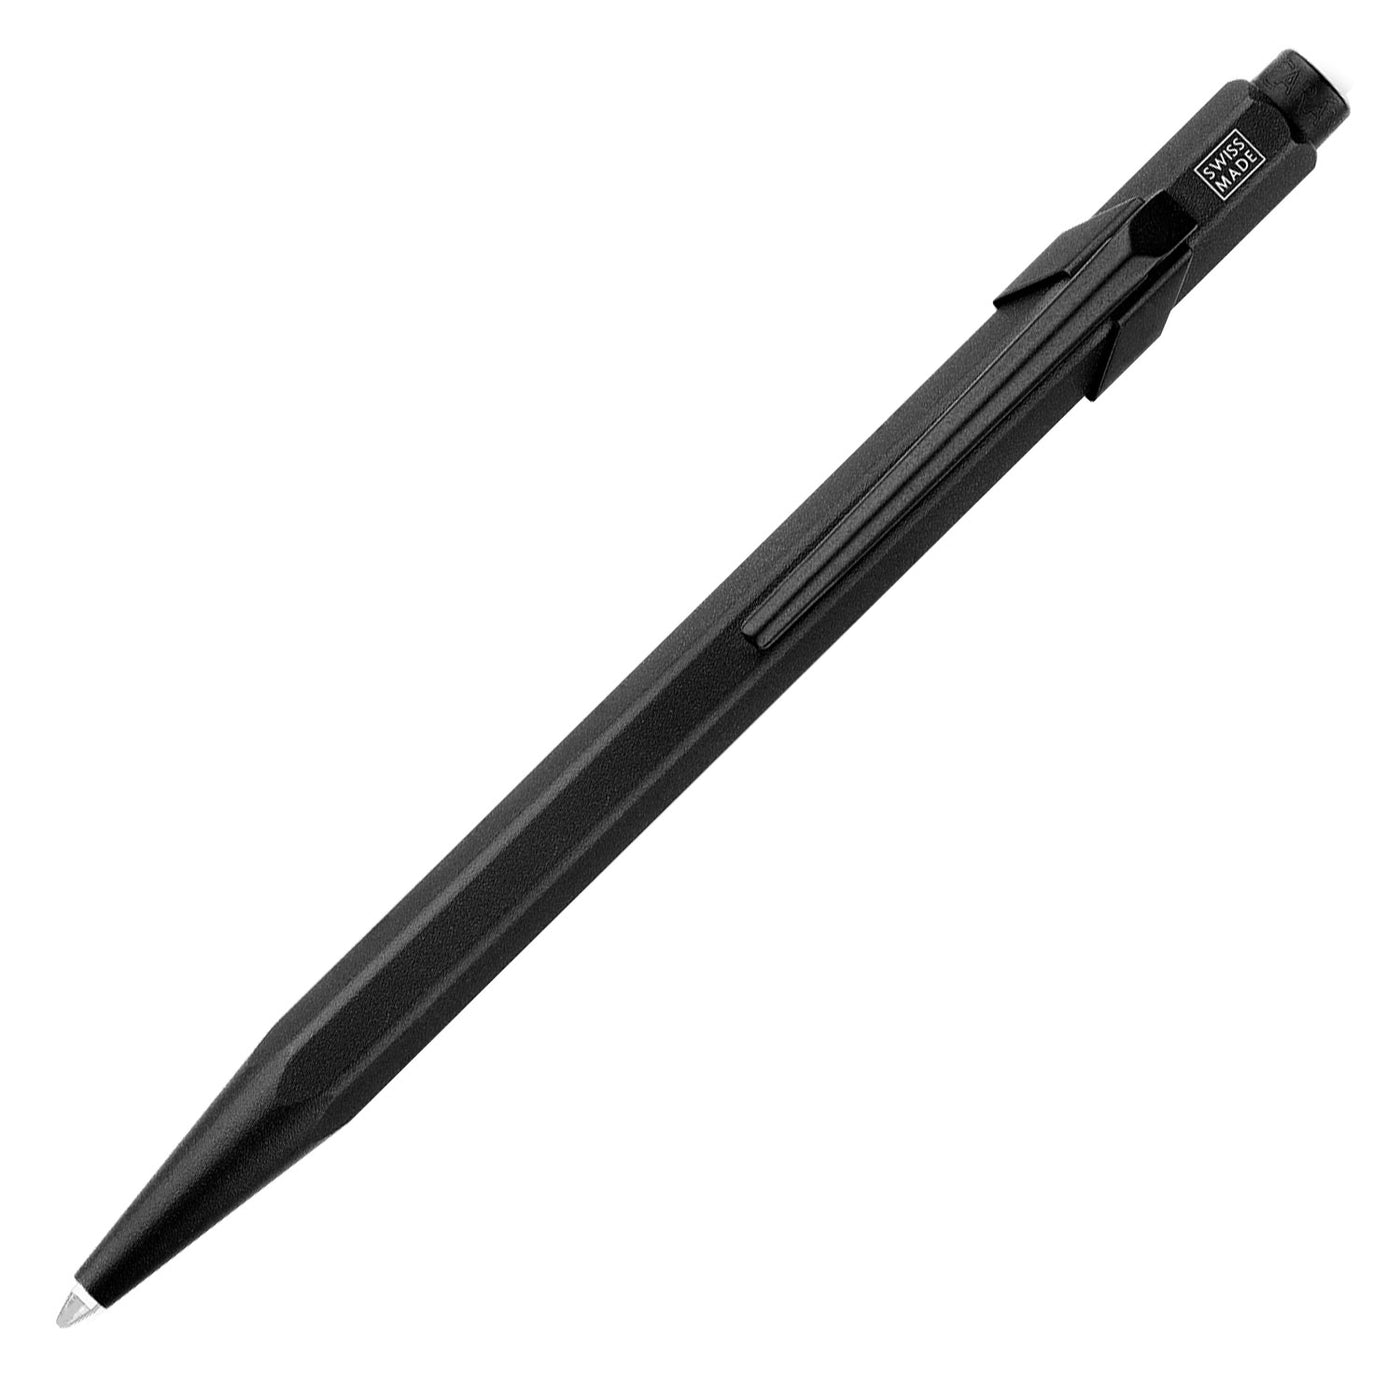 Caran d'Ache 849 Premium Ball Pen - Black Code 1